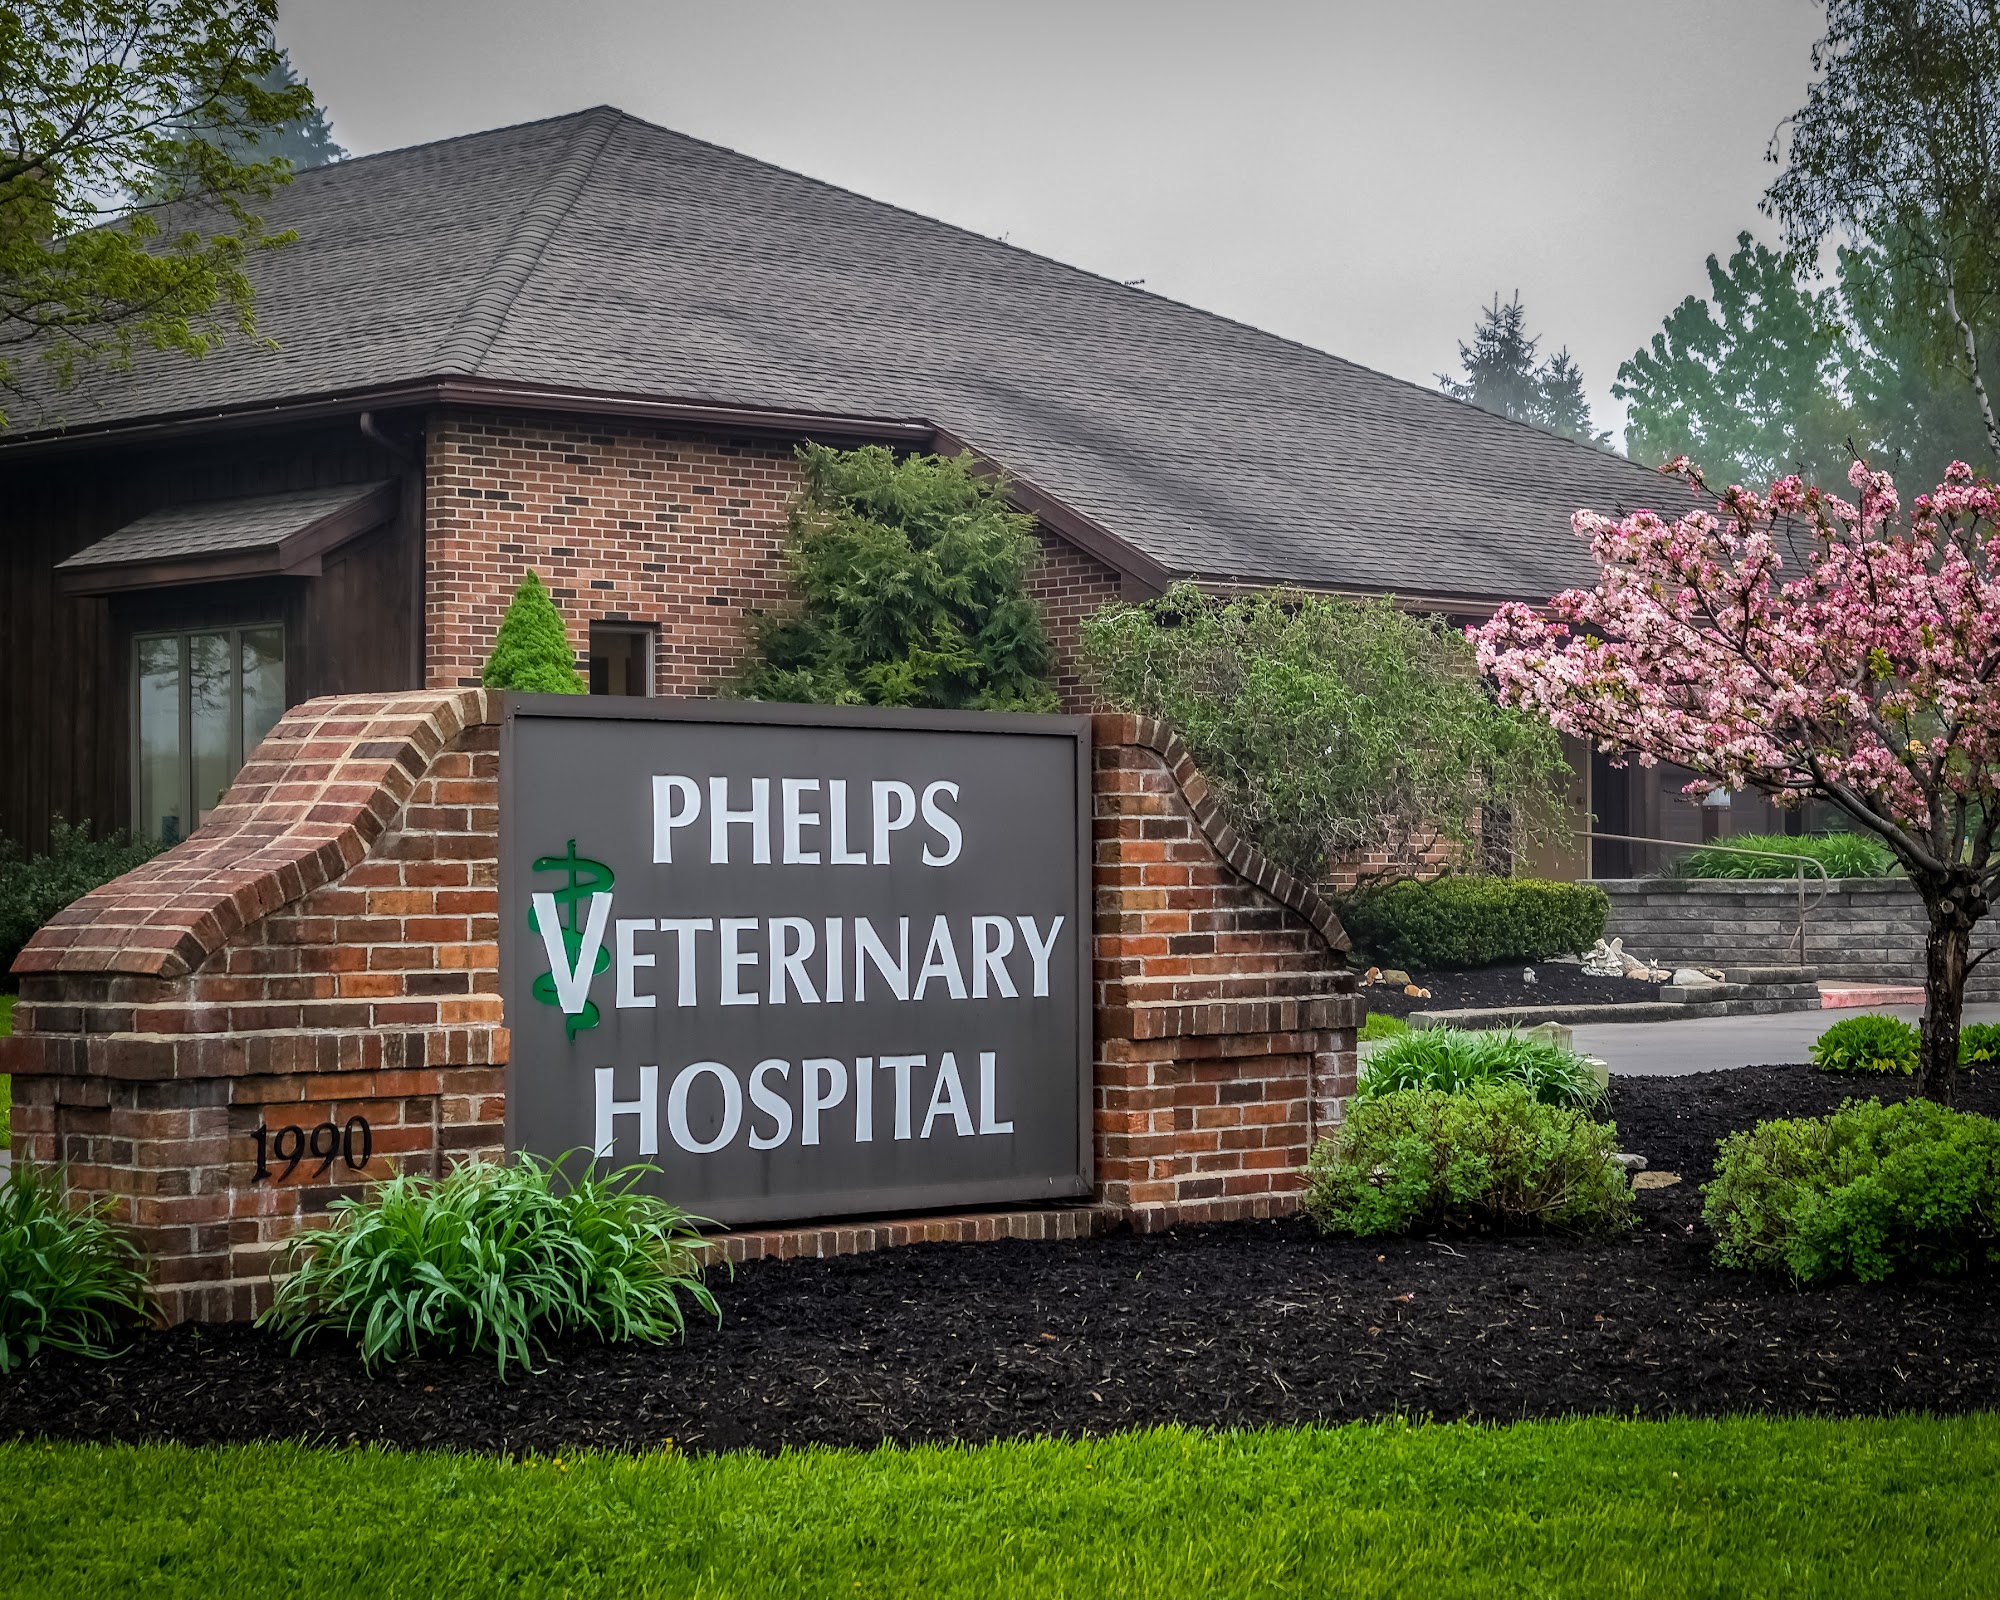 Phelps Veterinary Hospital